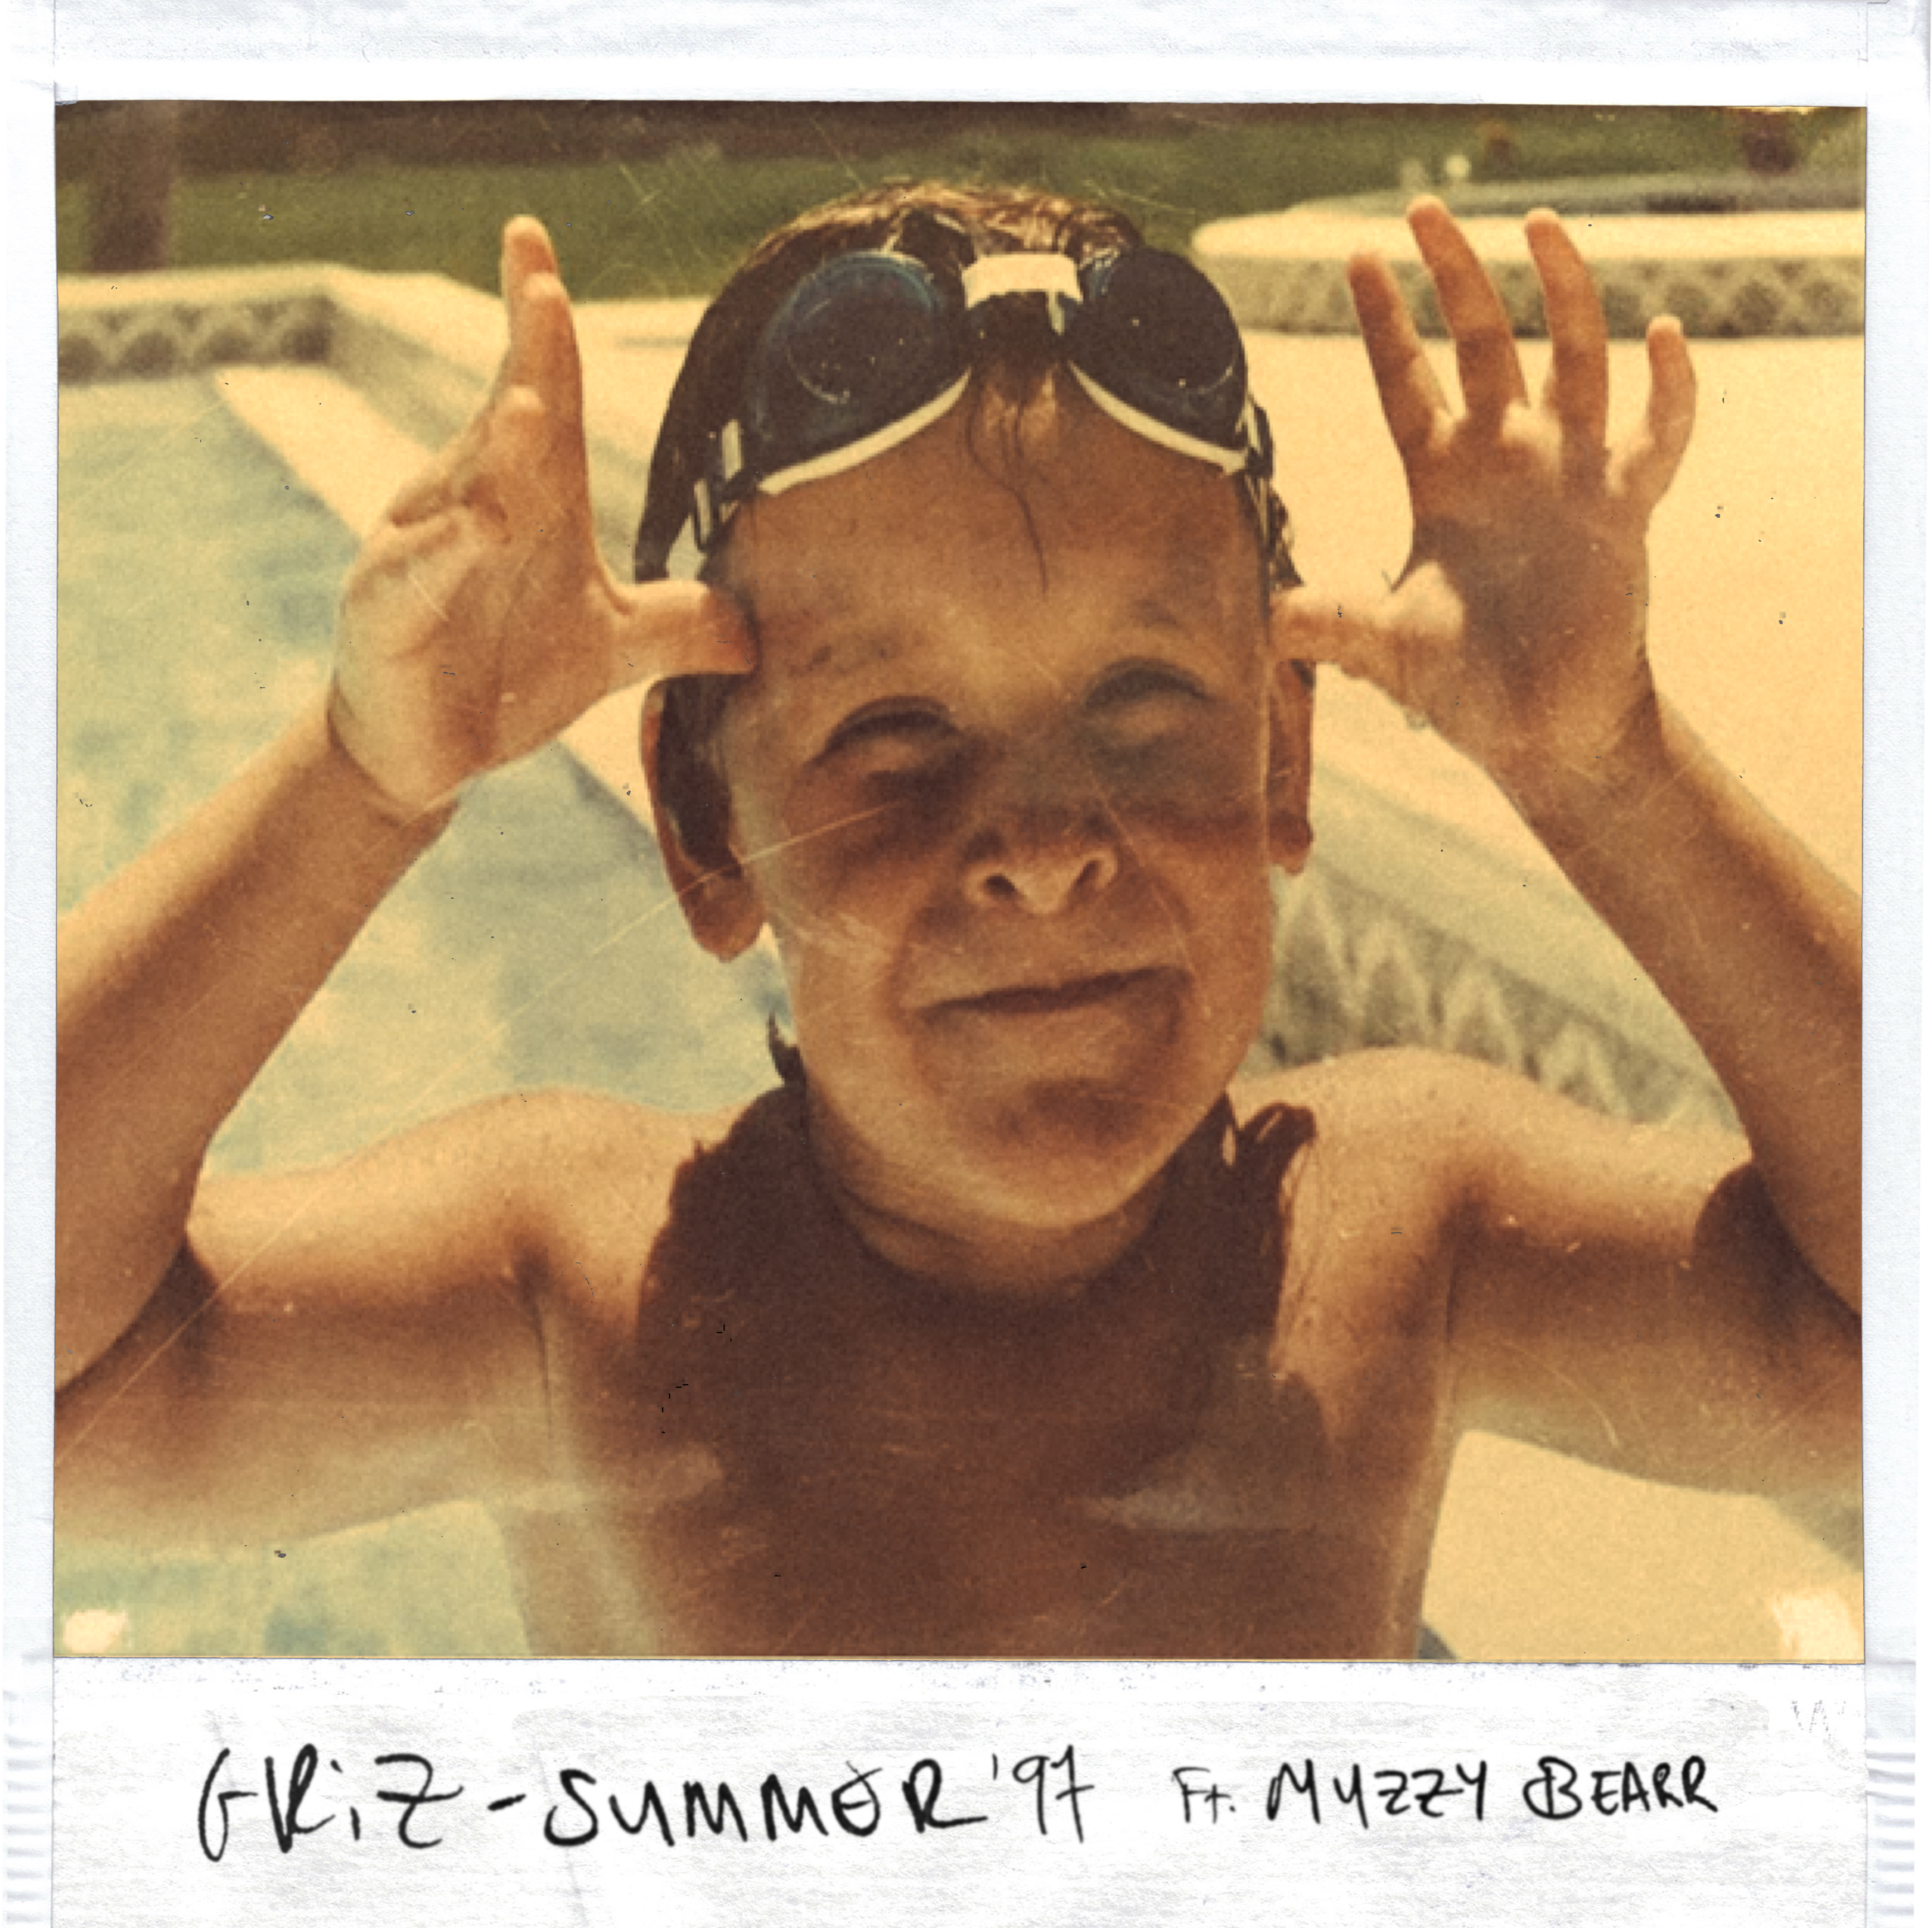 Skinuti Summer '97 ft. Muzzy Bearr